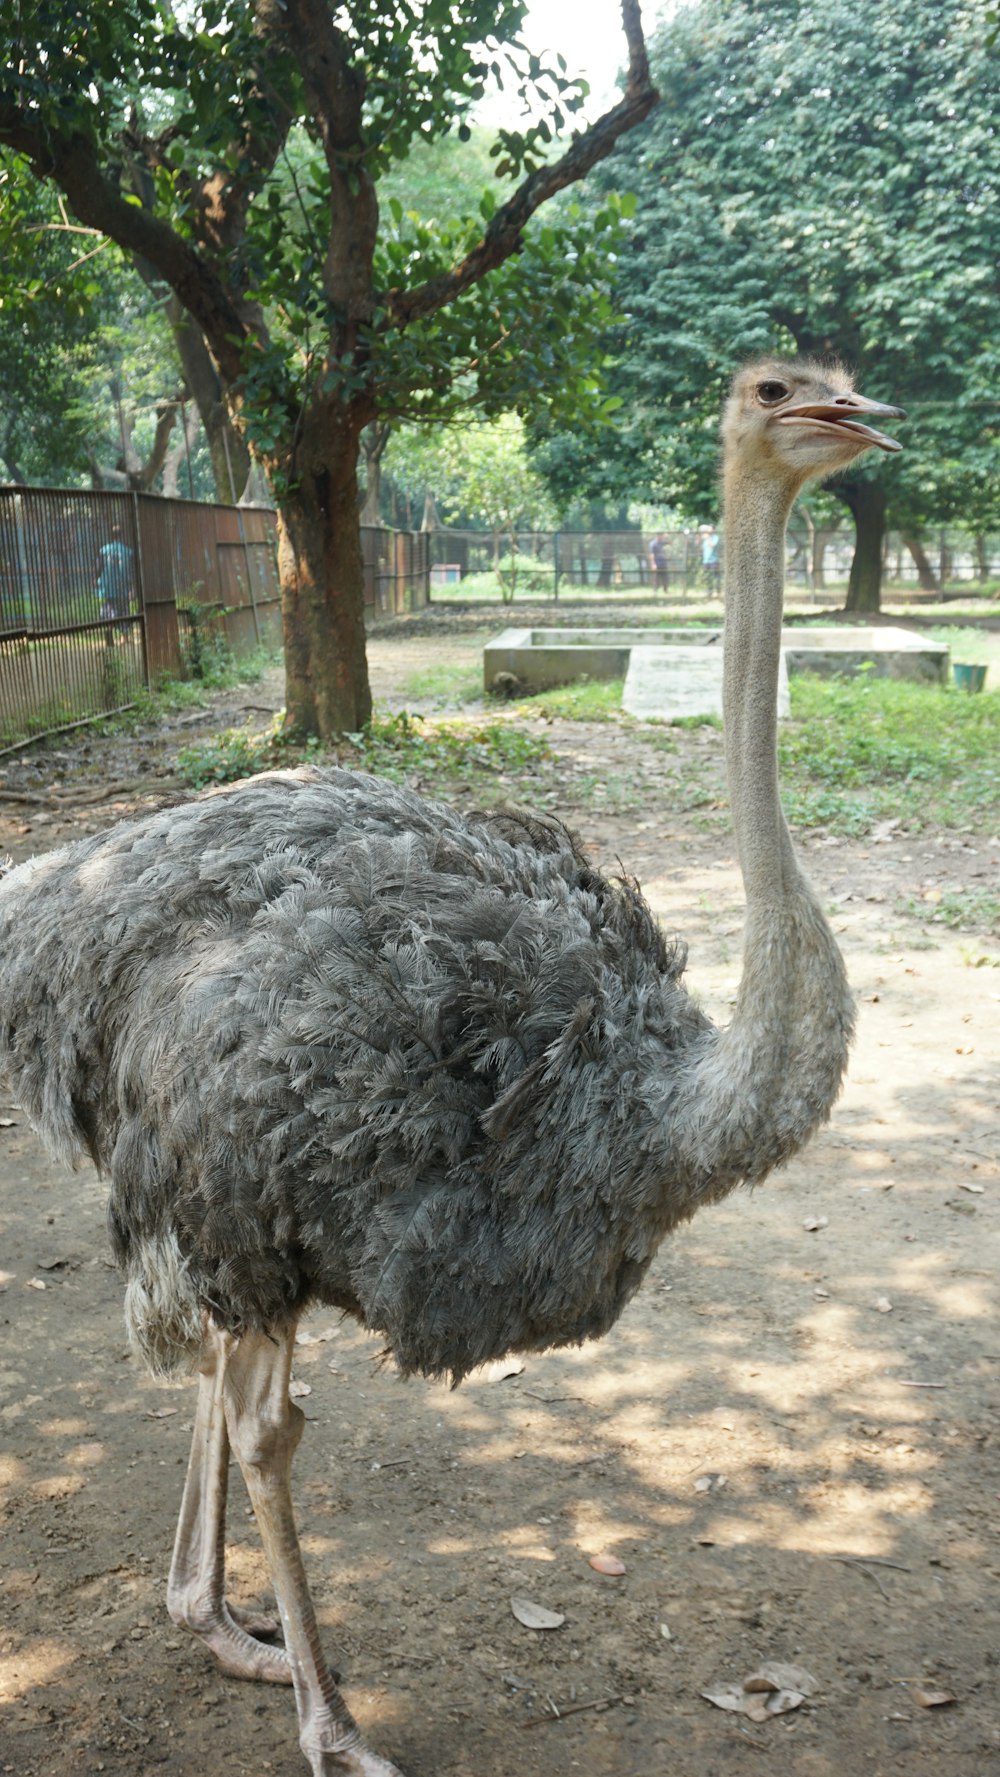 an ostrich standing in a dirt field next to a tree